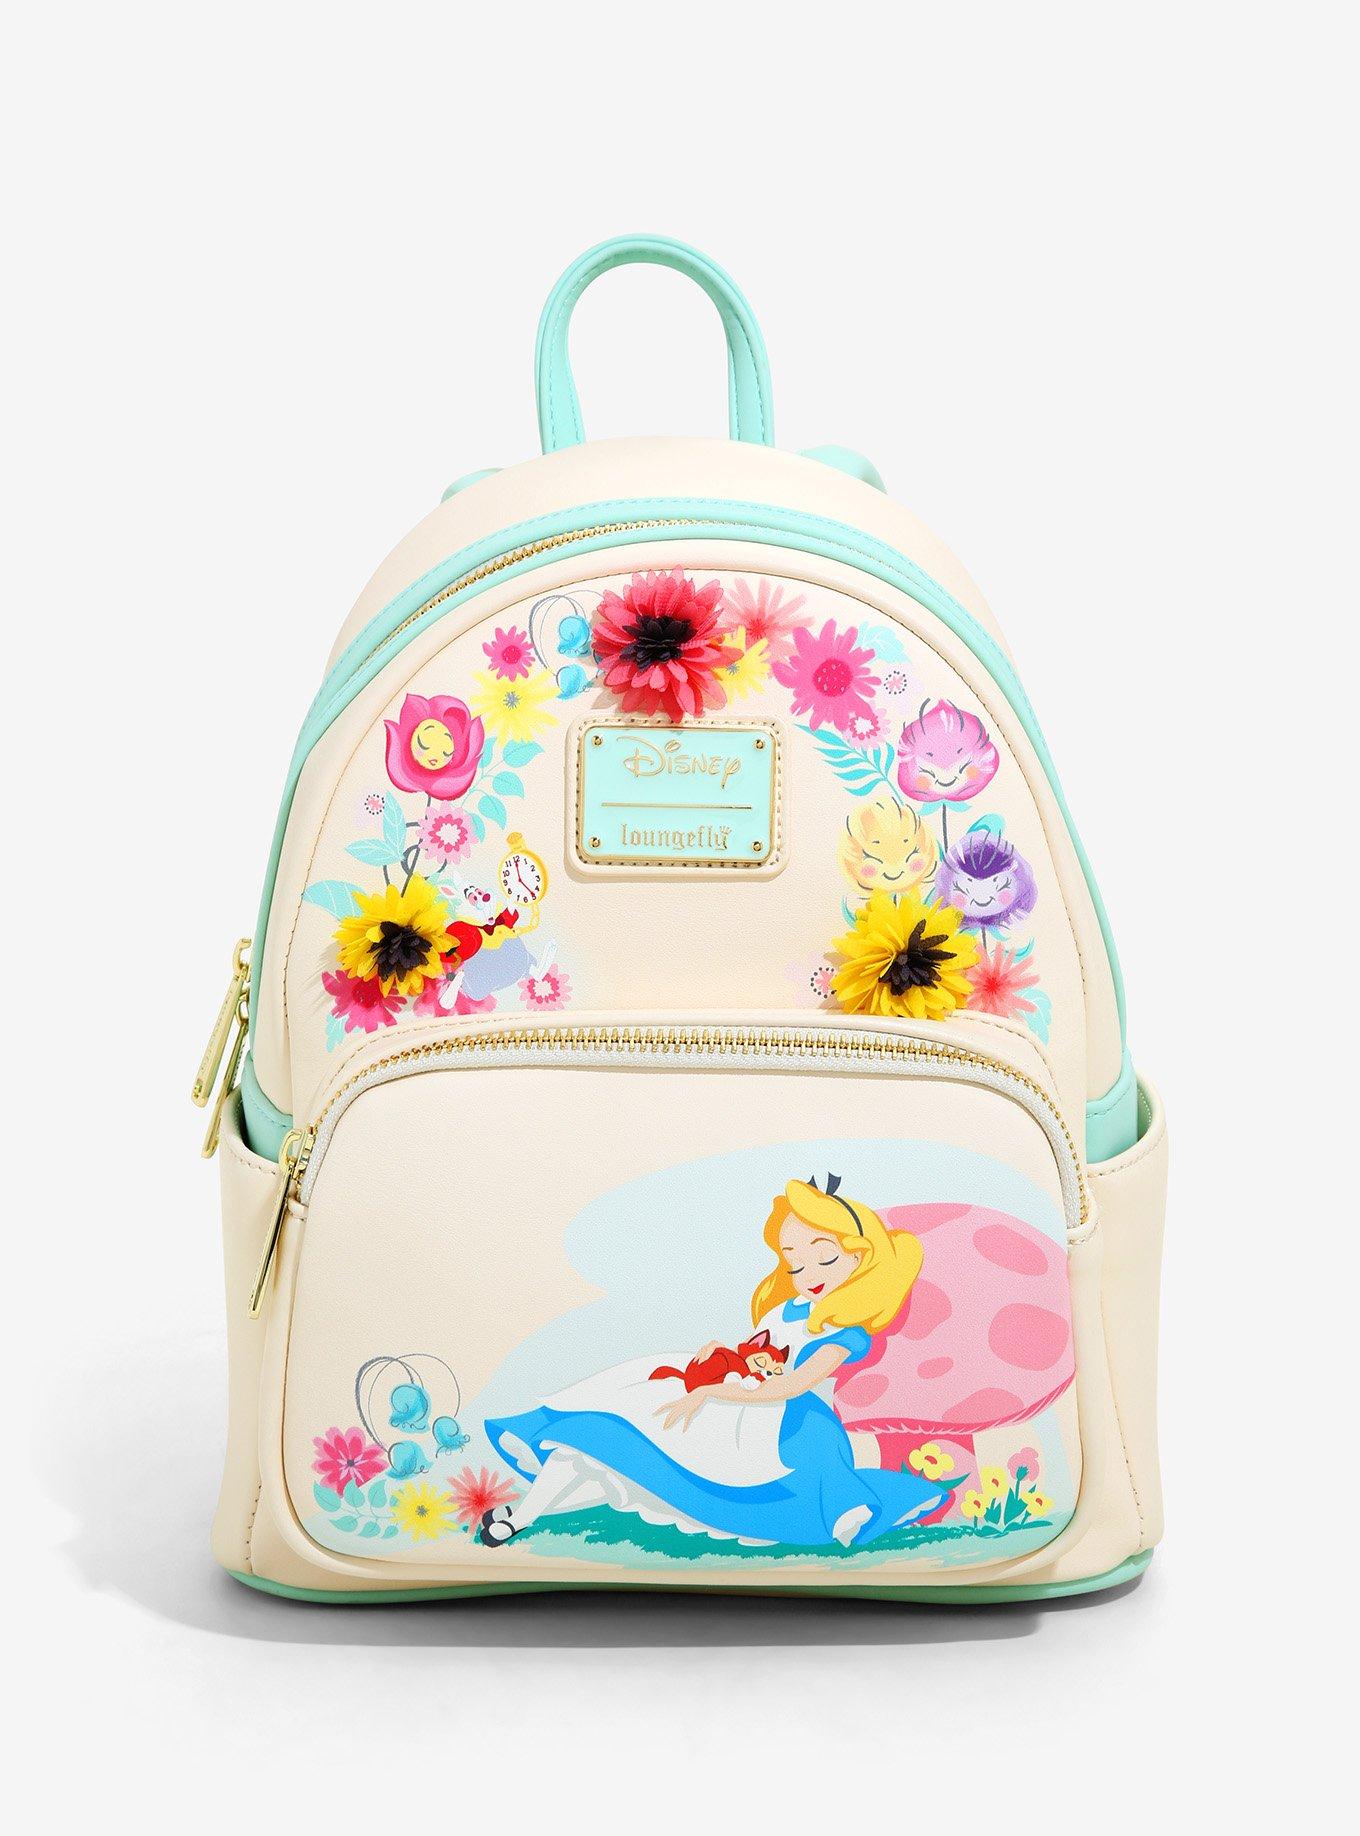 Loungefly Retro Alice in Wonderland Mini Backpack